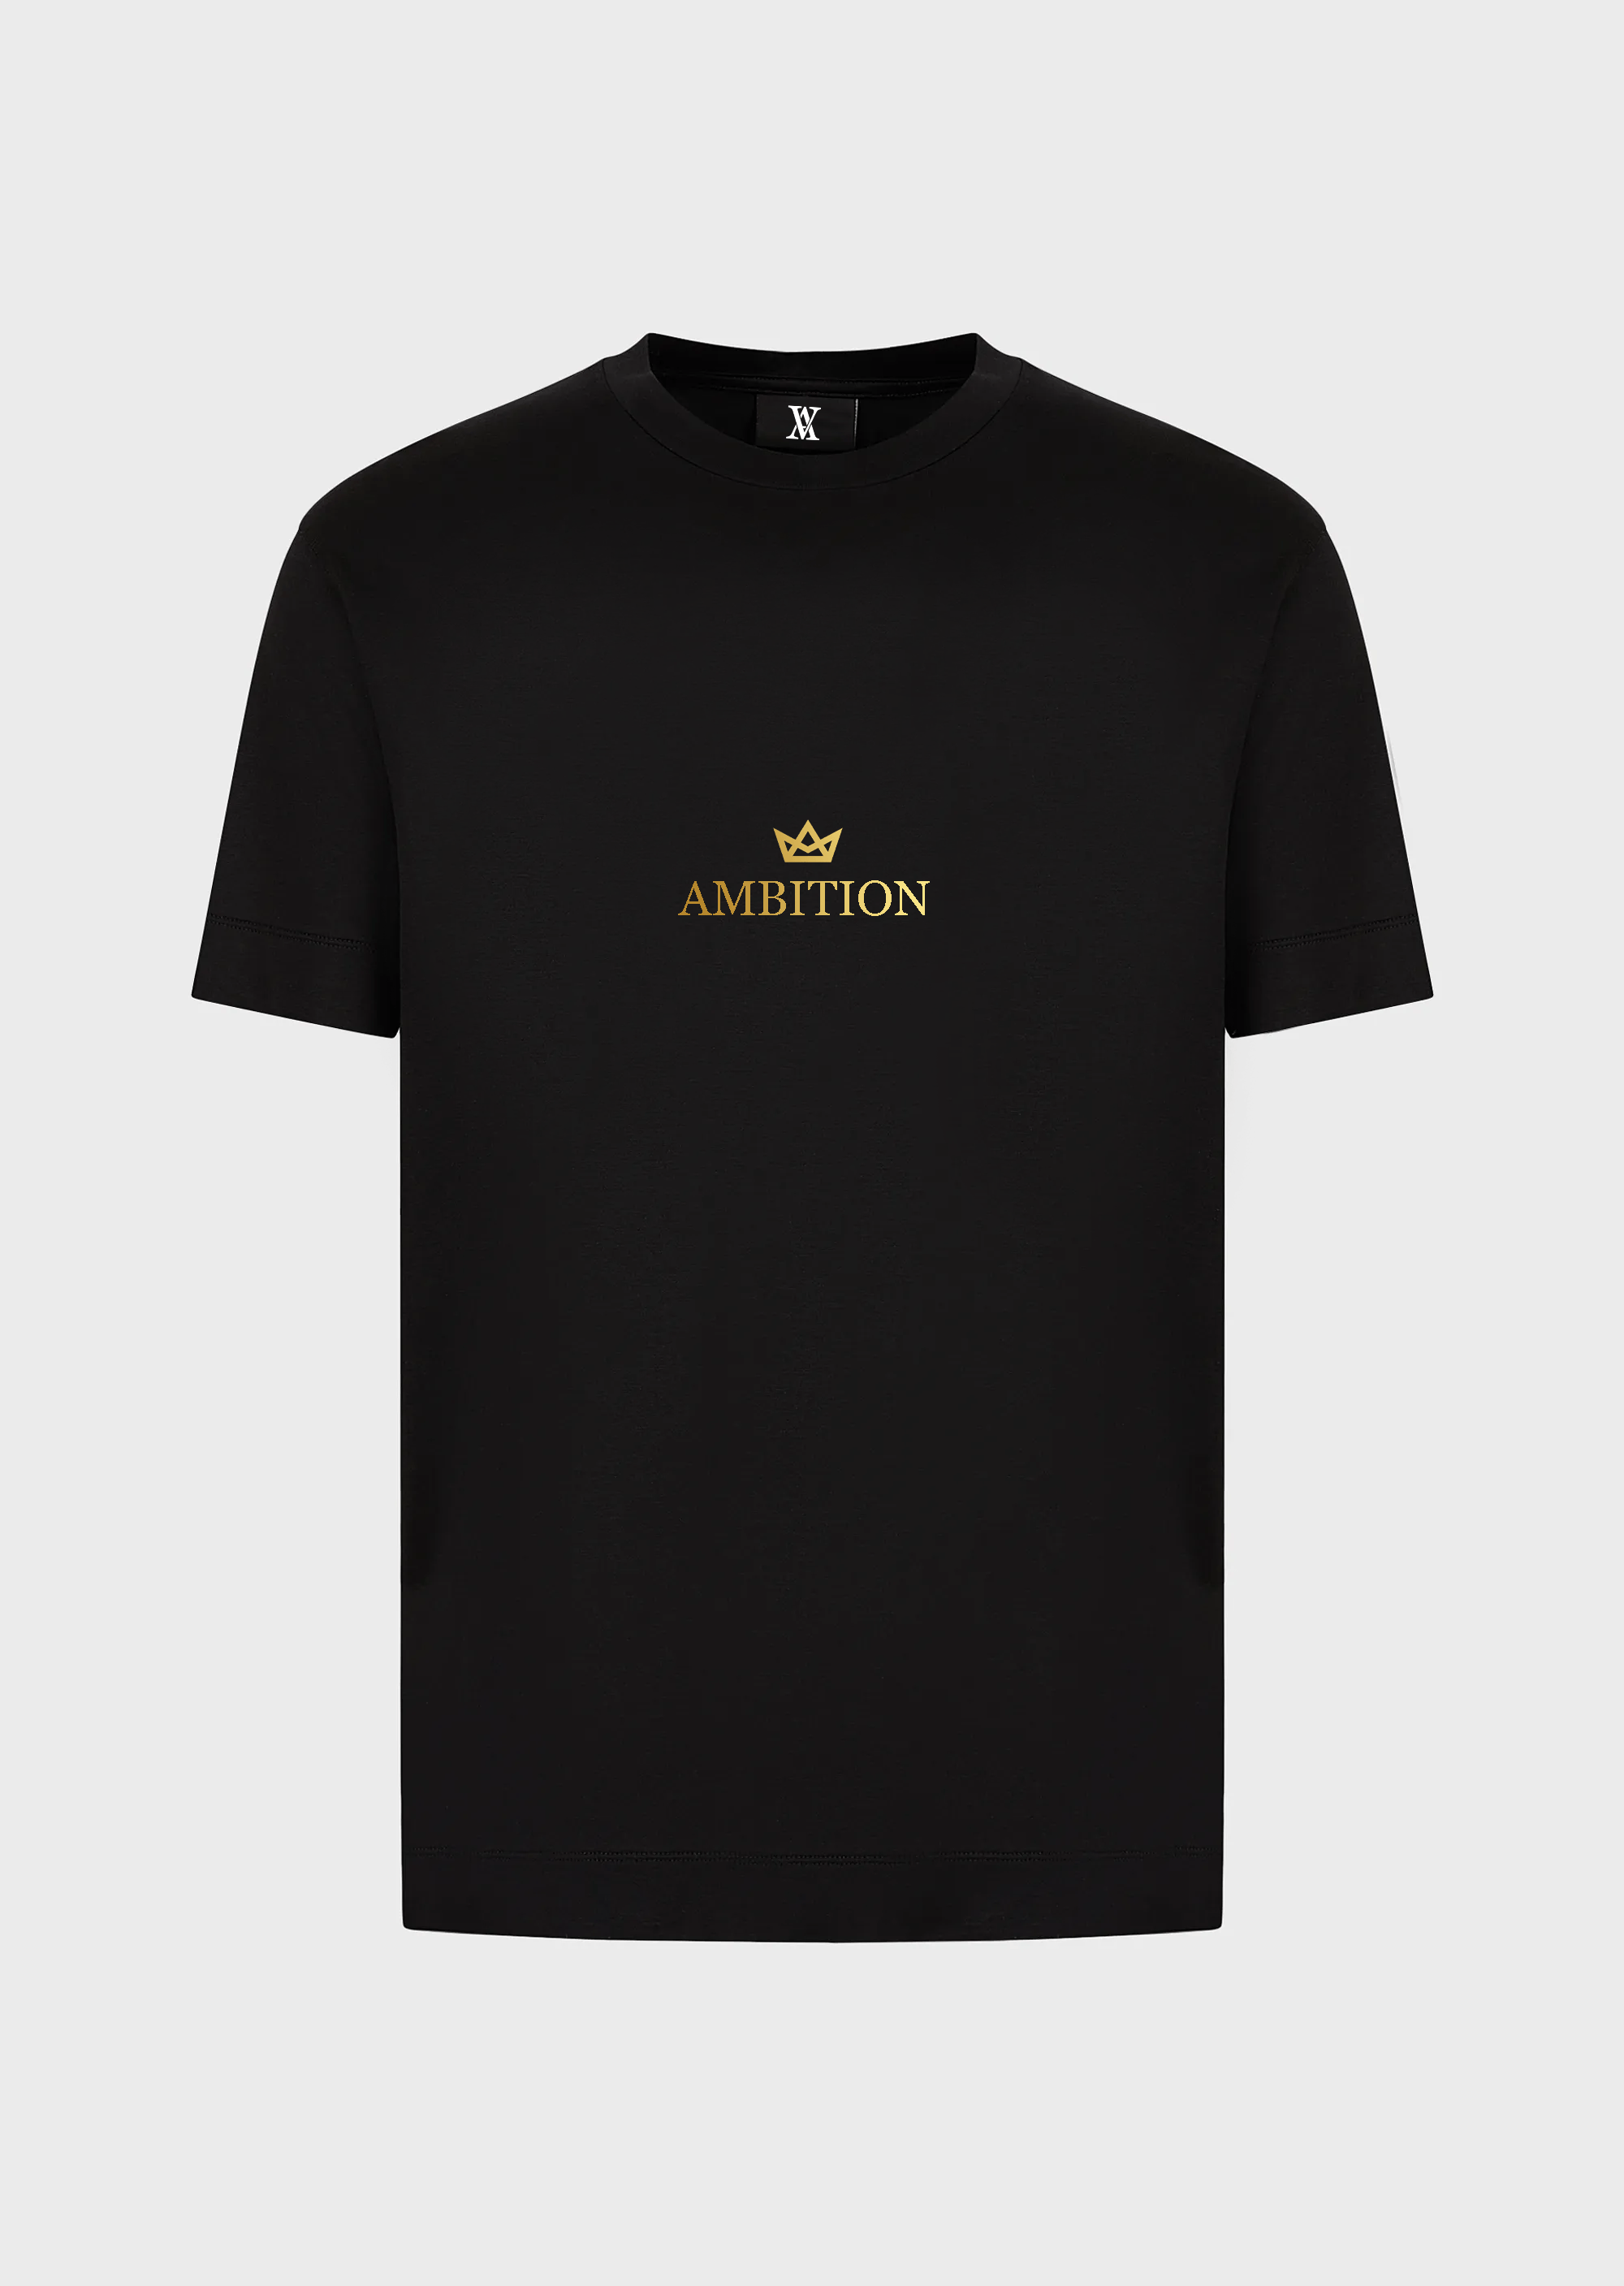 The Virtus T-Shirt – Virtus Apparel Store